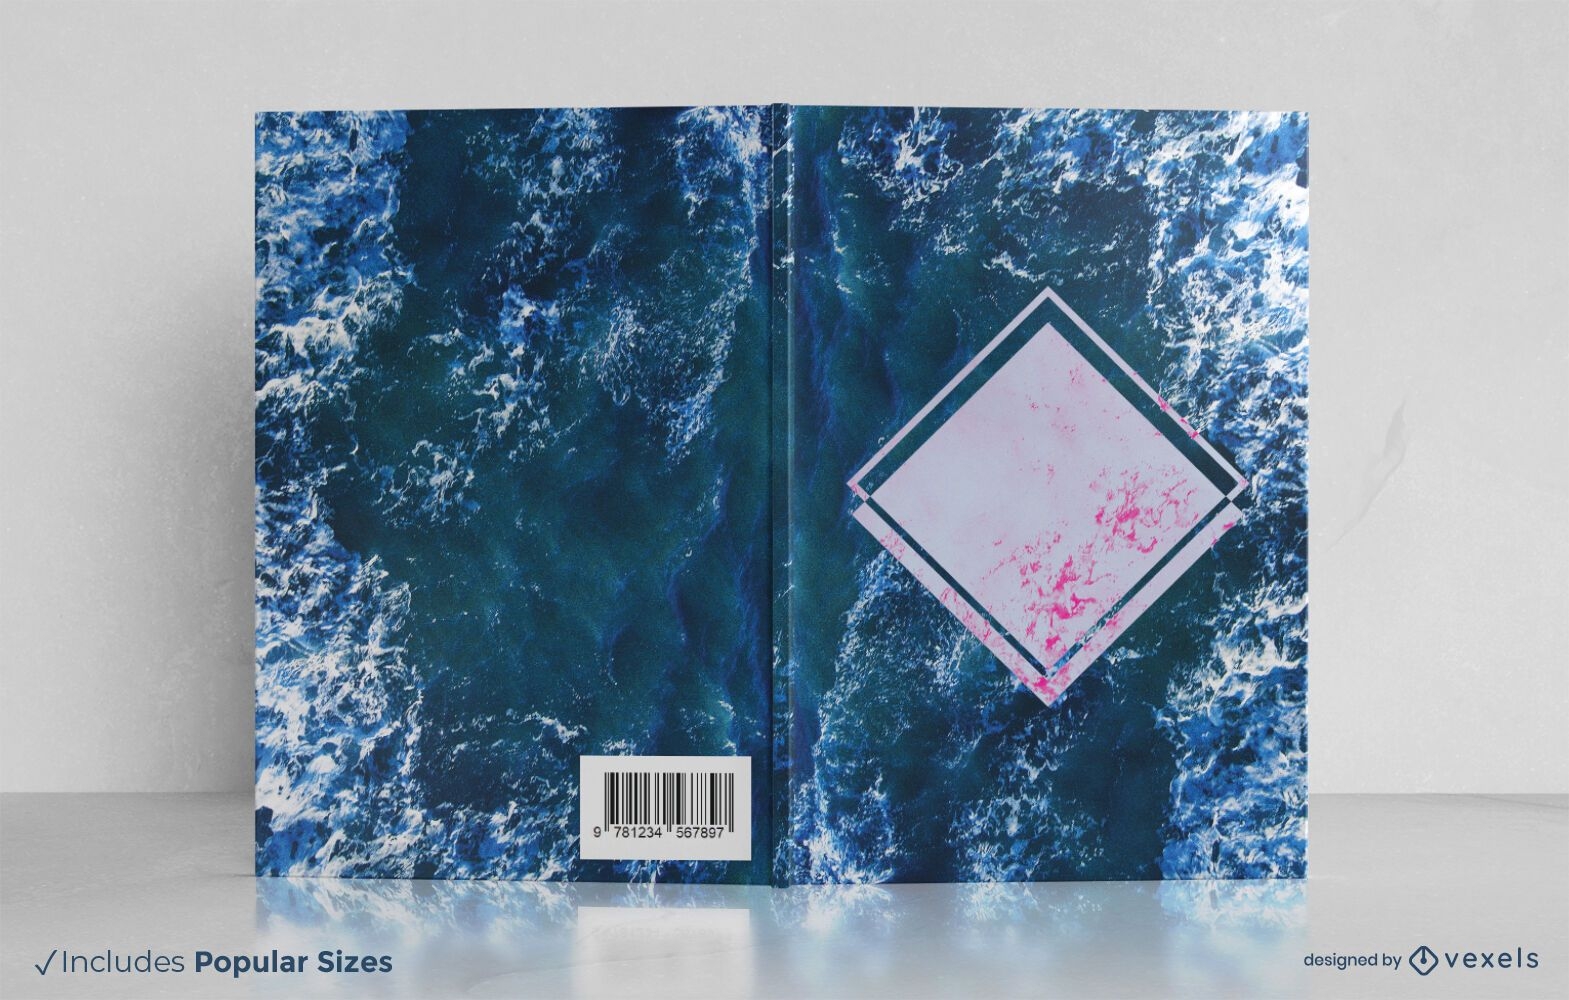 Ocean waves book cover design